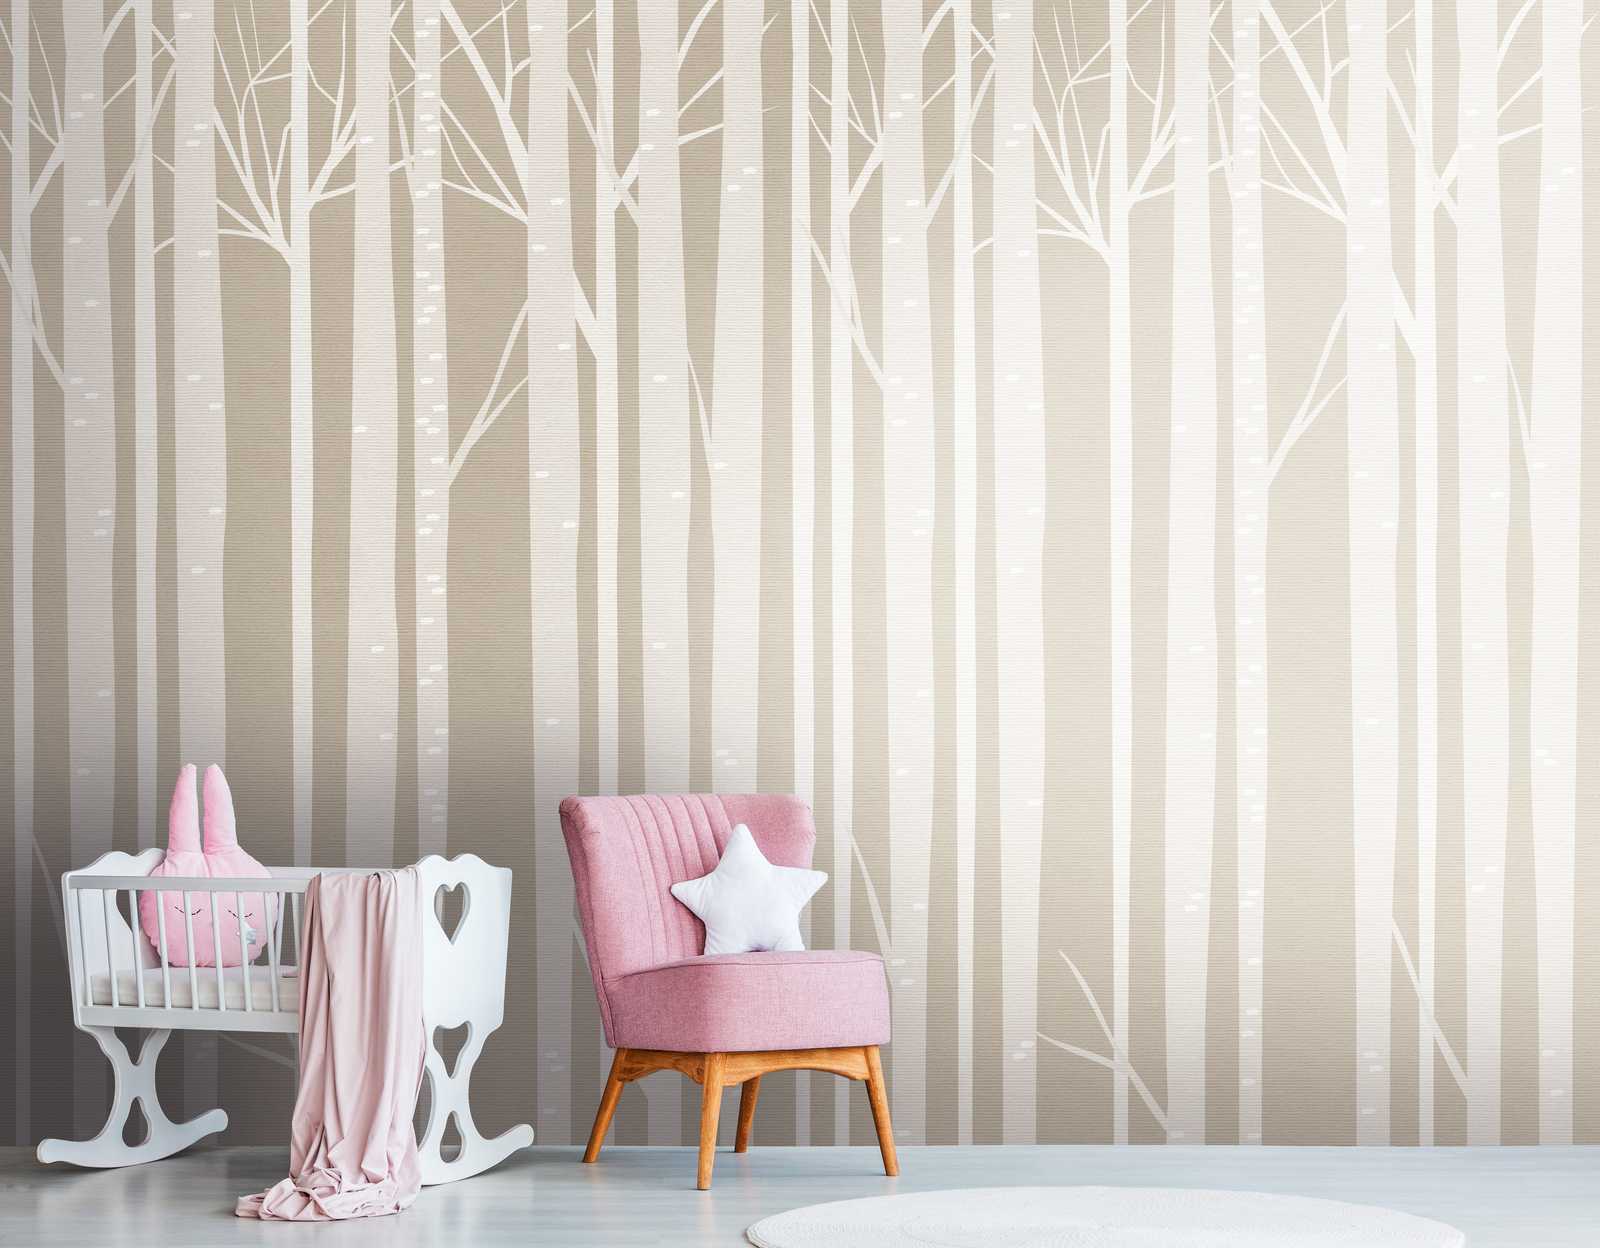             Wallpaper novelty | motif wallpaper fairy tale forest design, grey & beige
        